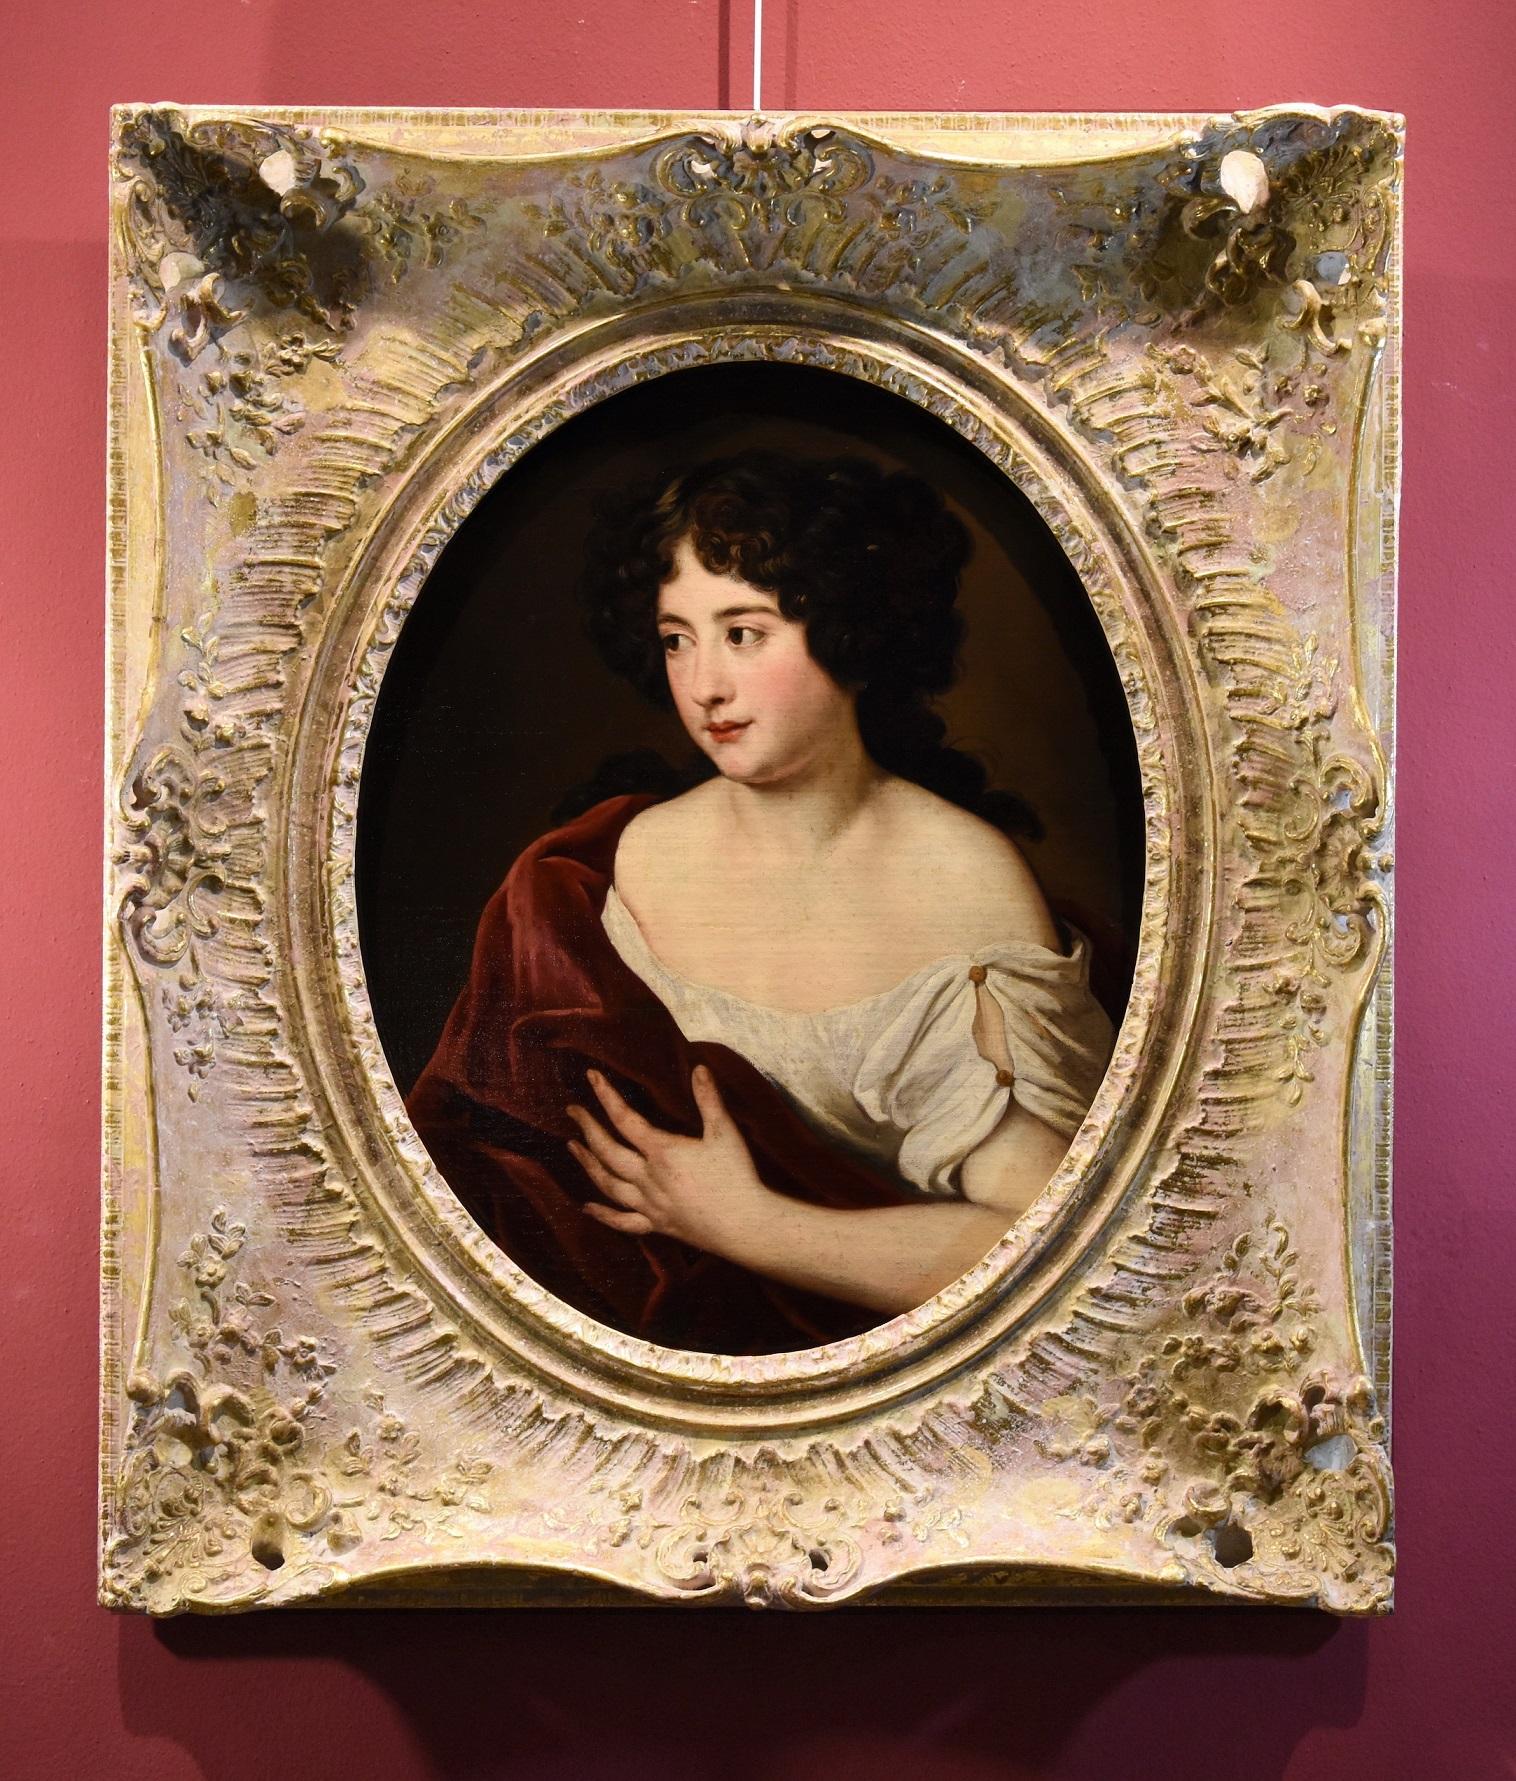 Portrait Lady Woman Voet Paint Oil on canvas Old master 17th Century Italian Art - Painting by Jacob Ferdinand Voet (Antwerp 1639 - Paris 1689) 